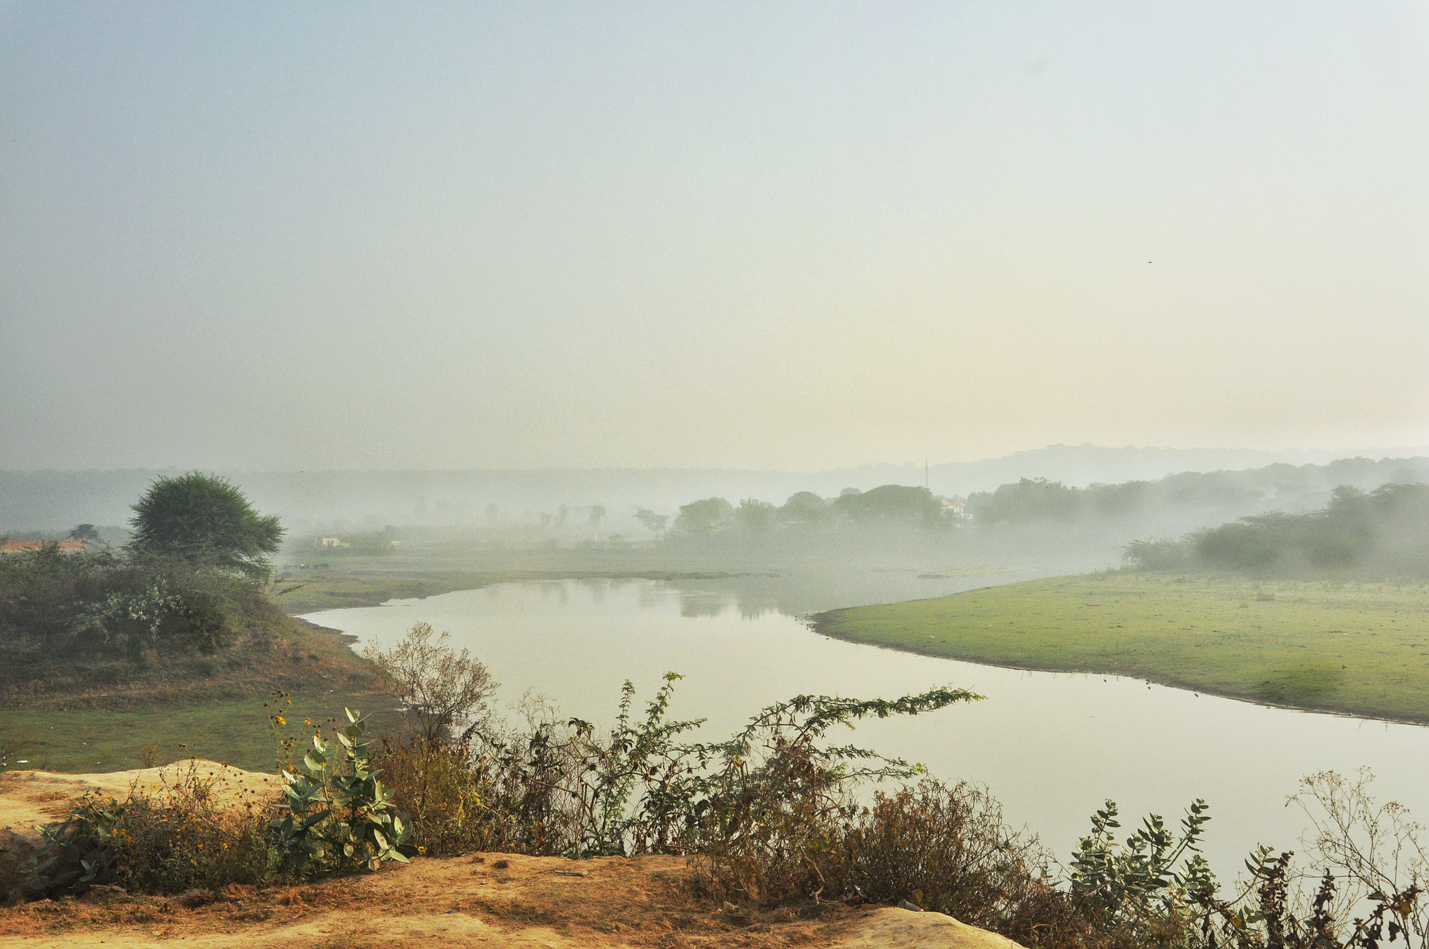 Haryana’s Disappearing Lakes